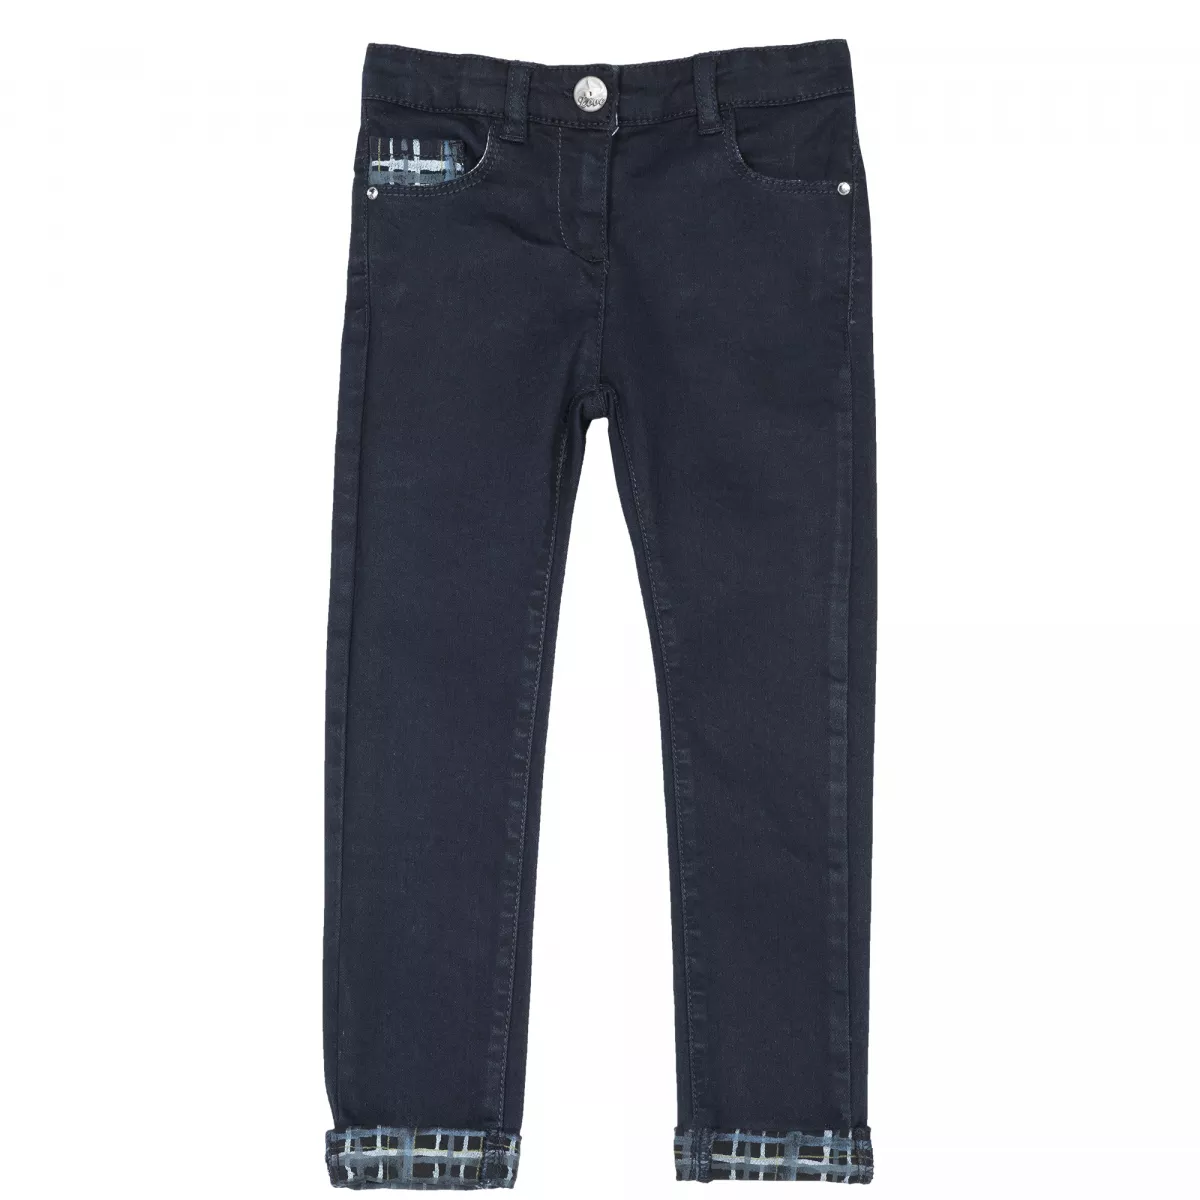 Pantaloni lungi jeans copii Chicco, albastru inchis, 110